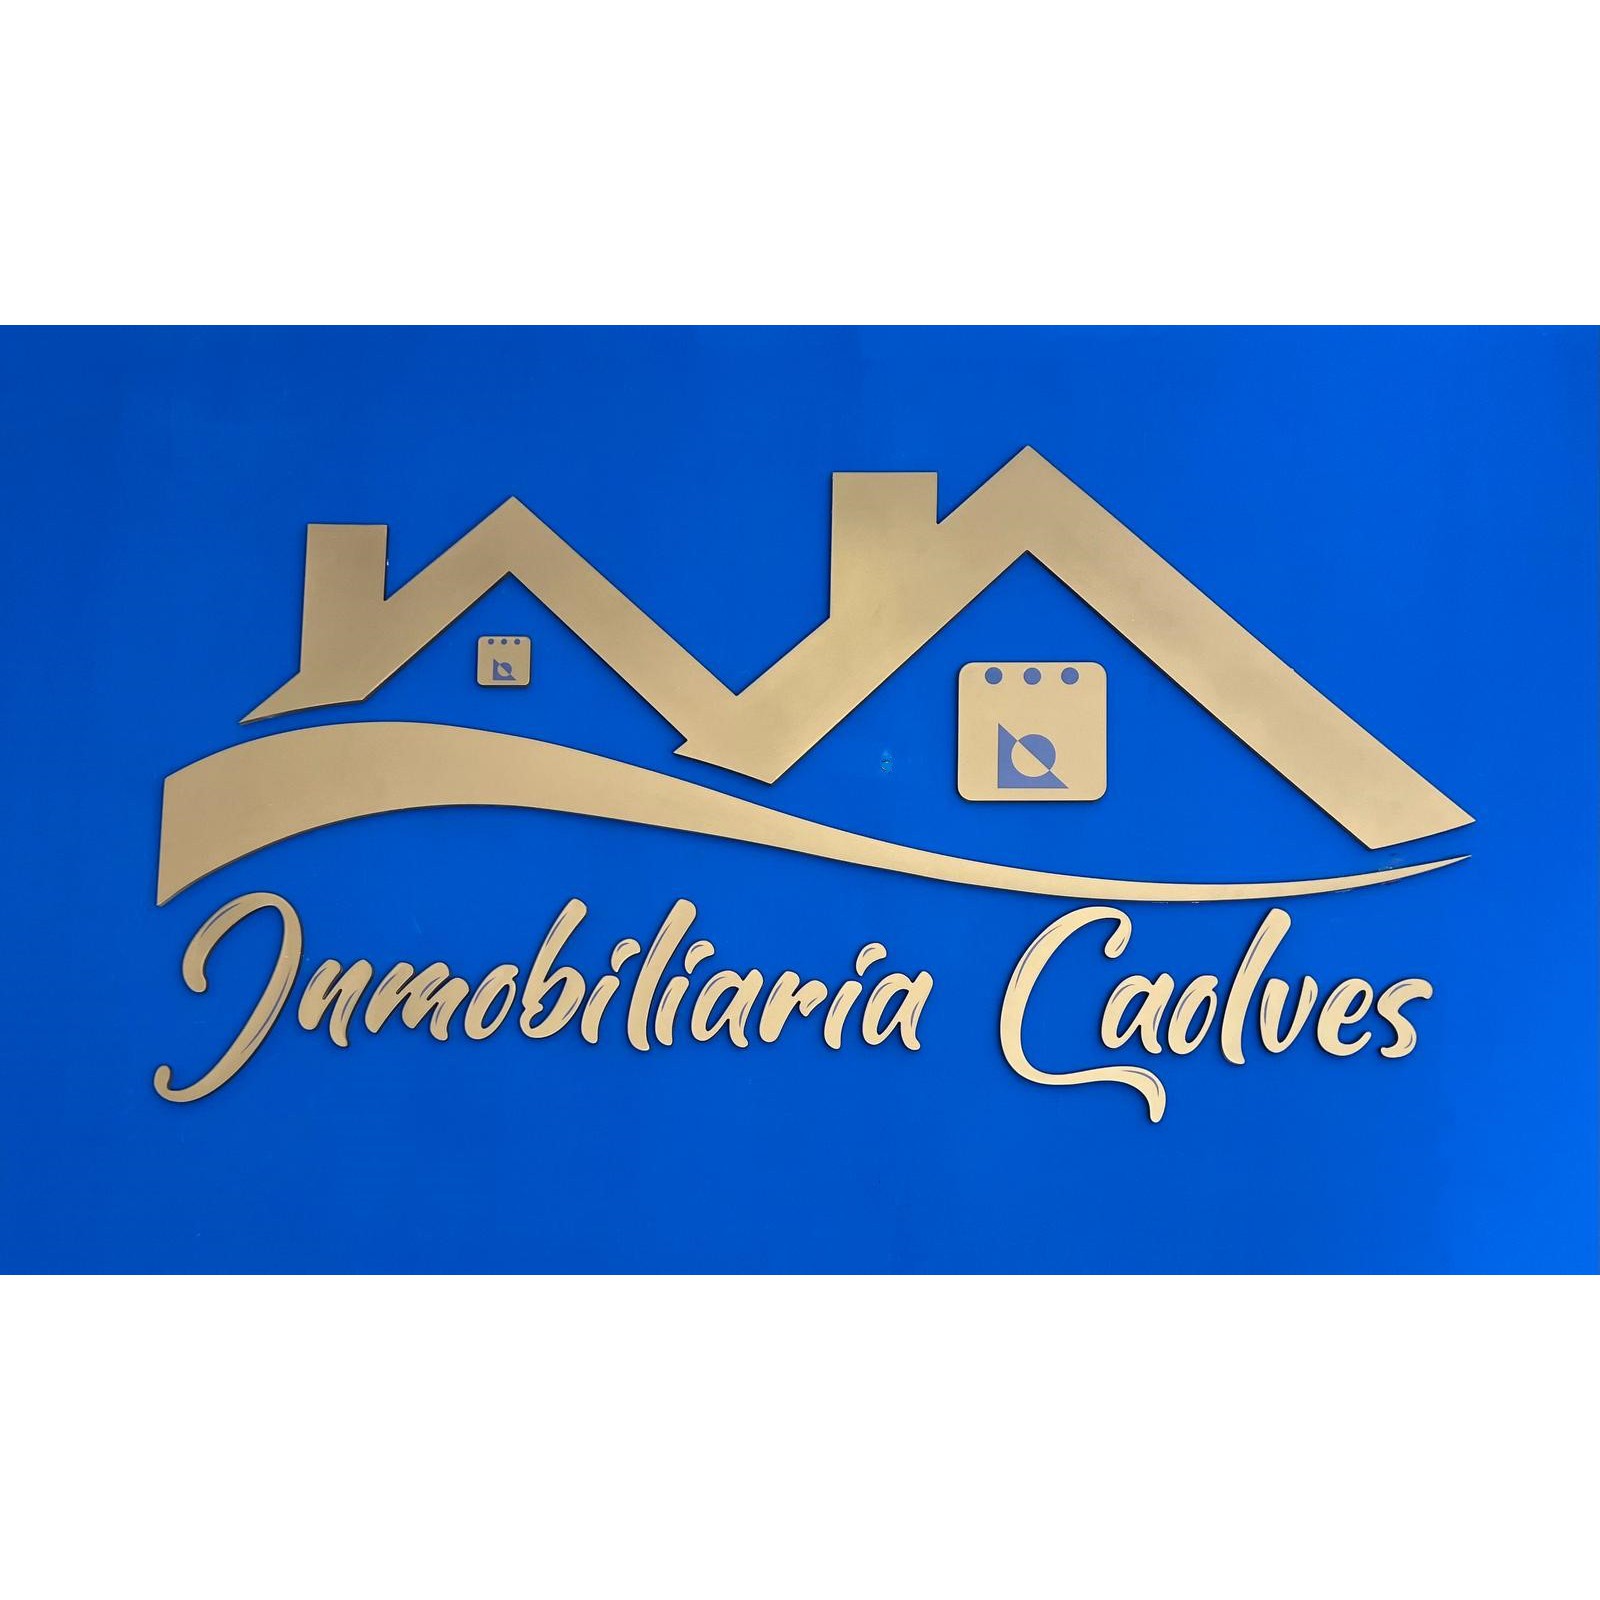 Inmobiliaria Caolves Logo